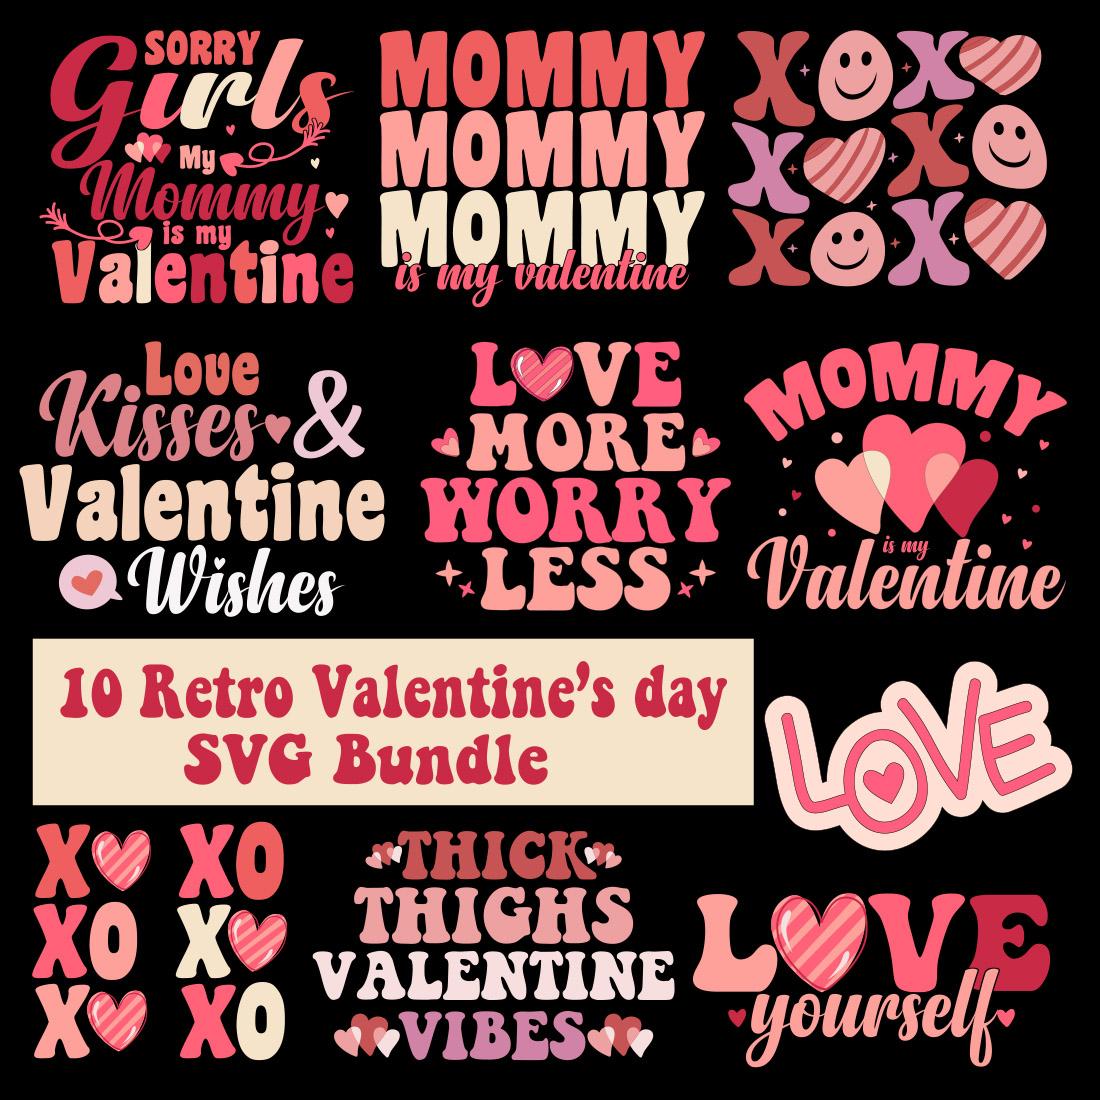 Retro Valentine's Day SVG Bundle cover image.